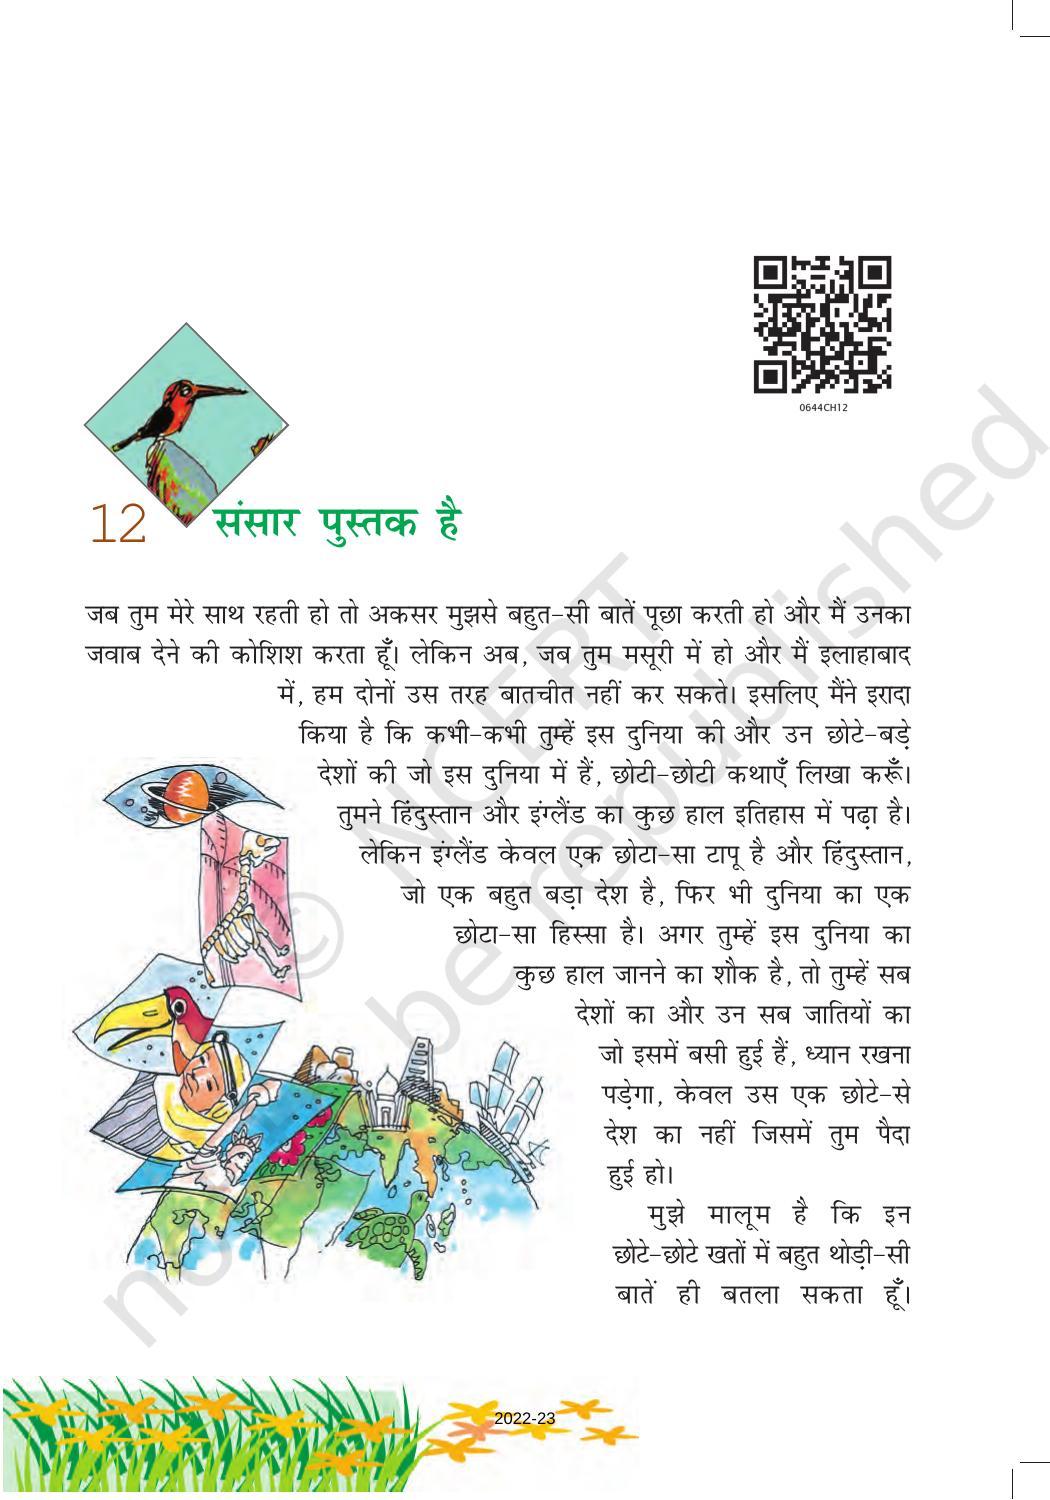 NCERT Book for Class 6 Hindi(Vasant Bhag 1) : Chapter 12-संसार पुस्तक है - Page 1